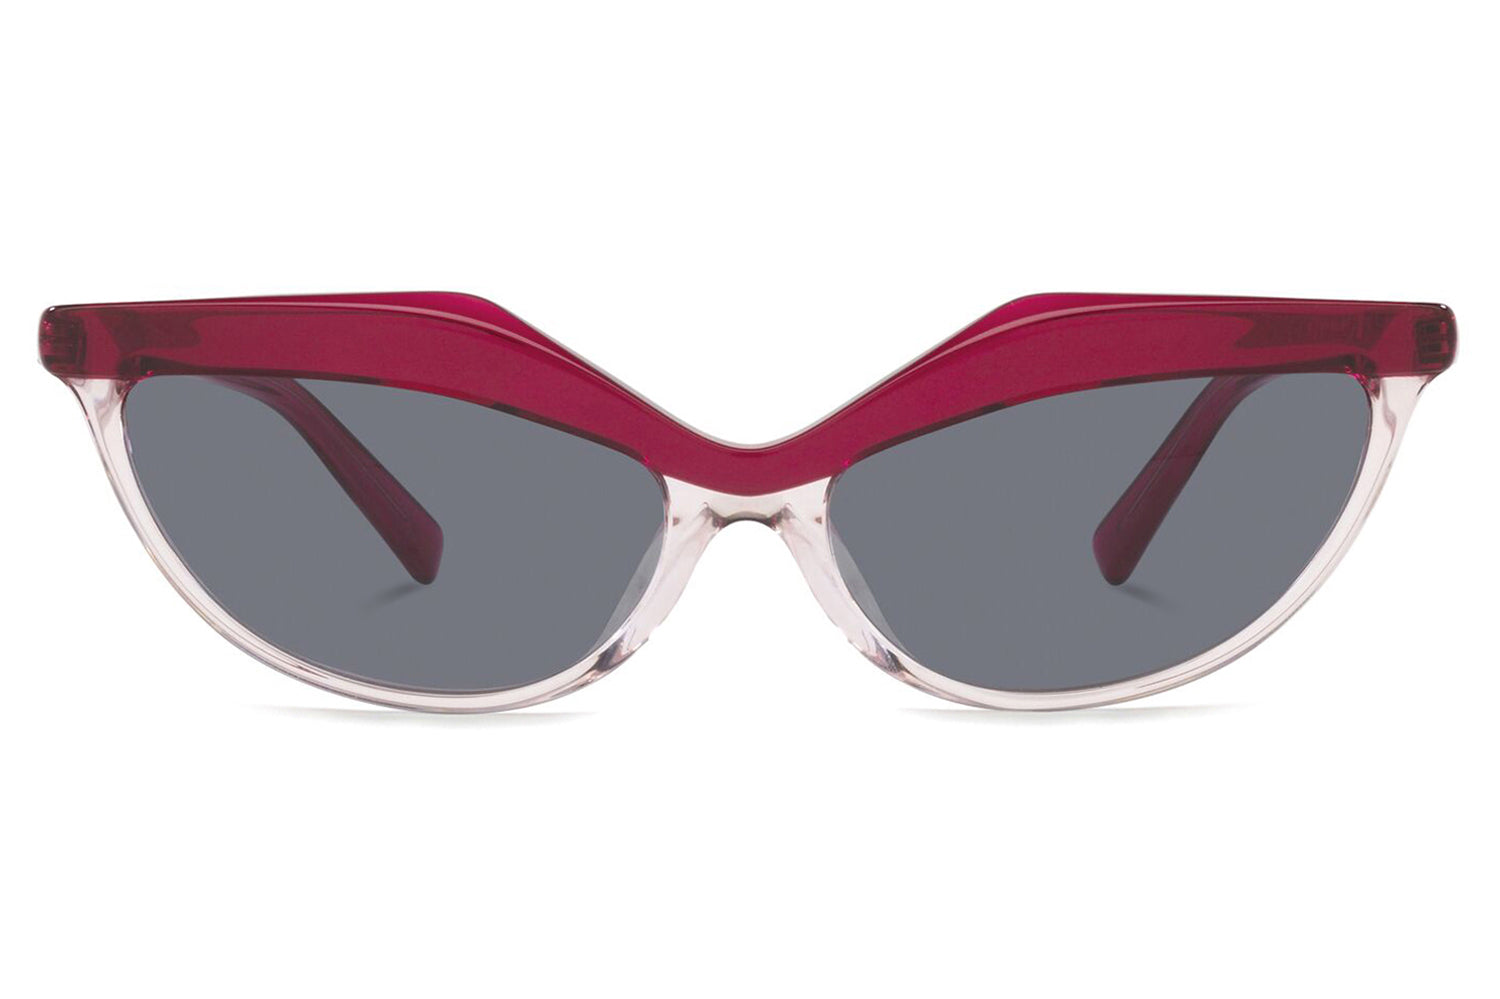 Alain Mikli® Sunglasses Specs Collective